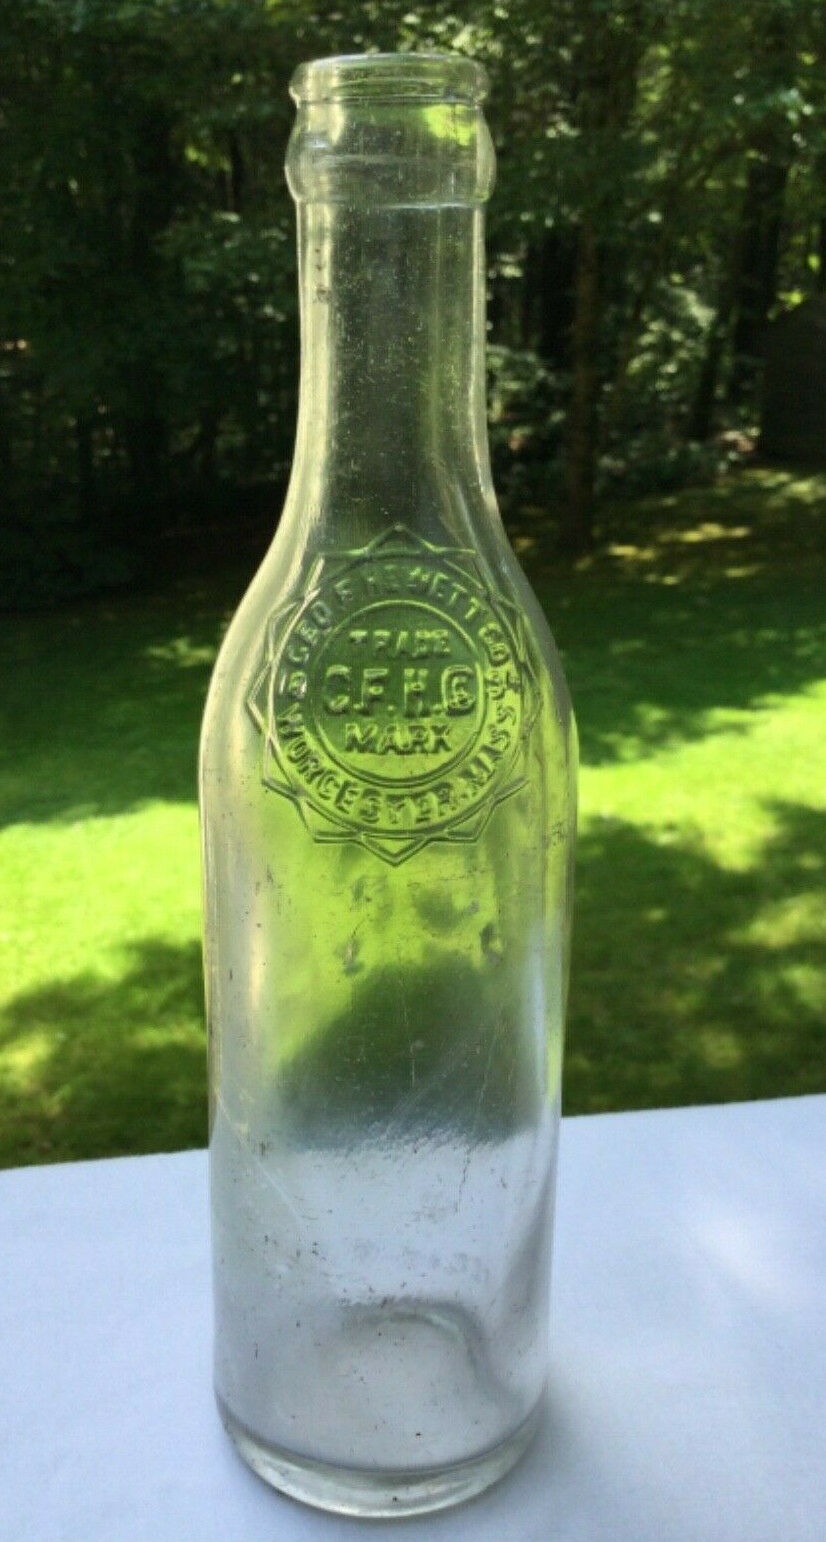 Antique Vintage Geo. F. Hewett Co. Soda Bottle - Worcester Mass. - Early 1900s